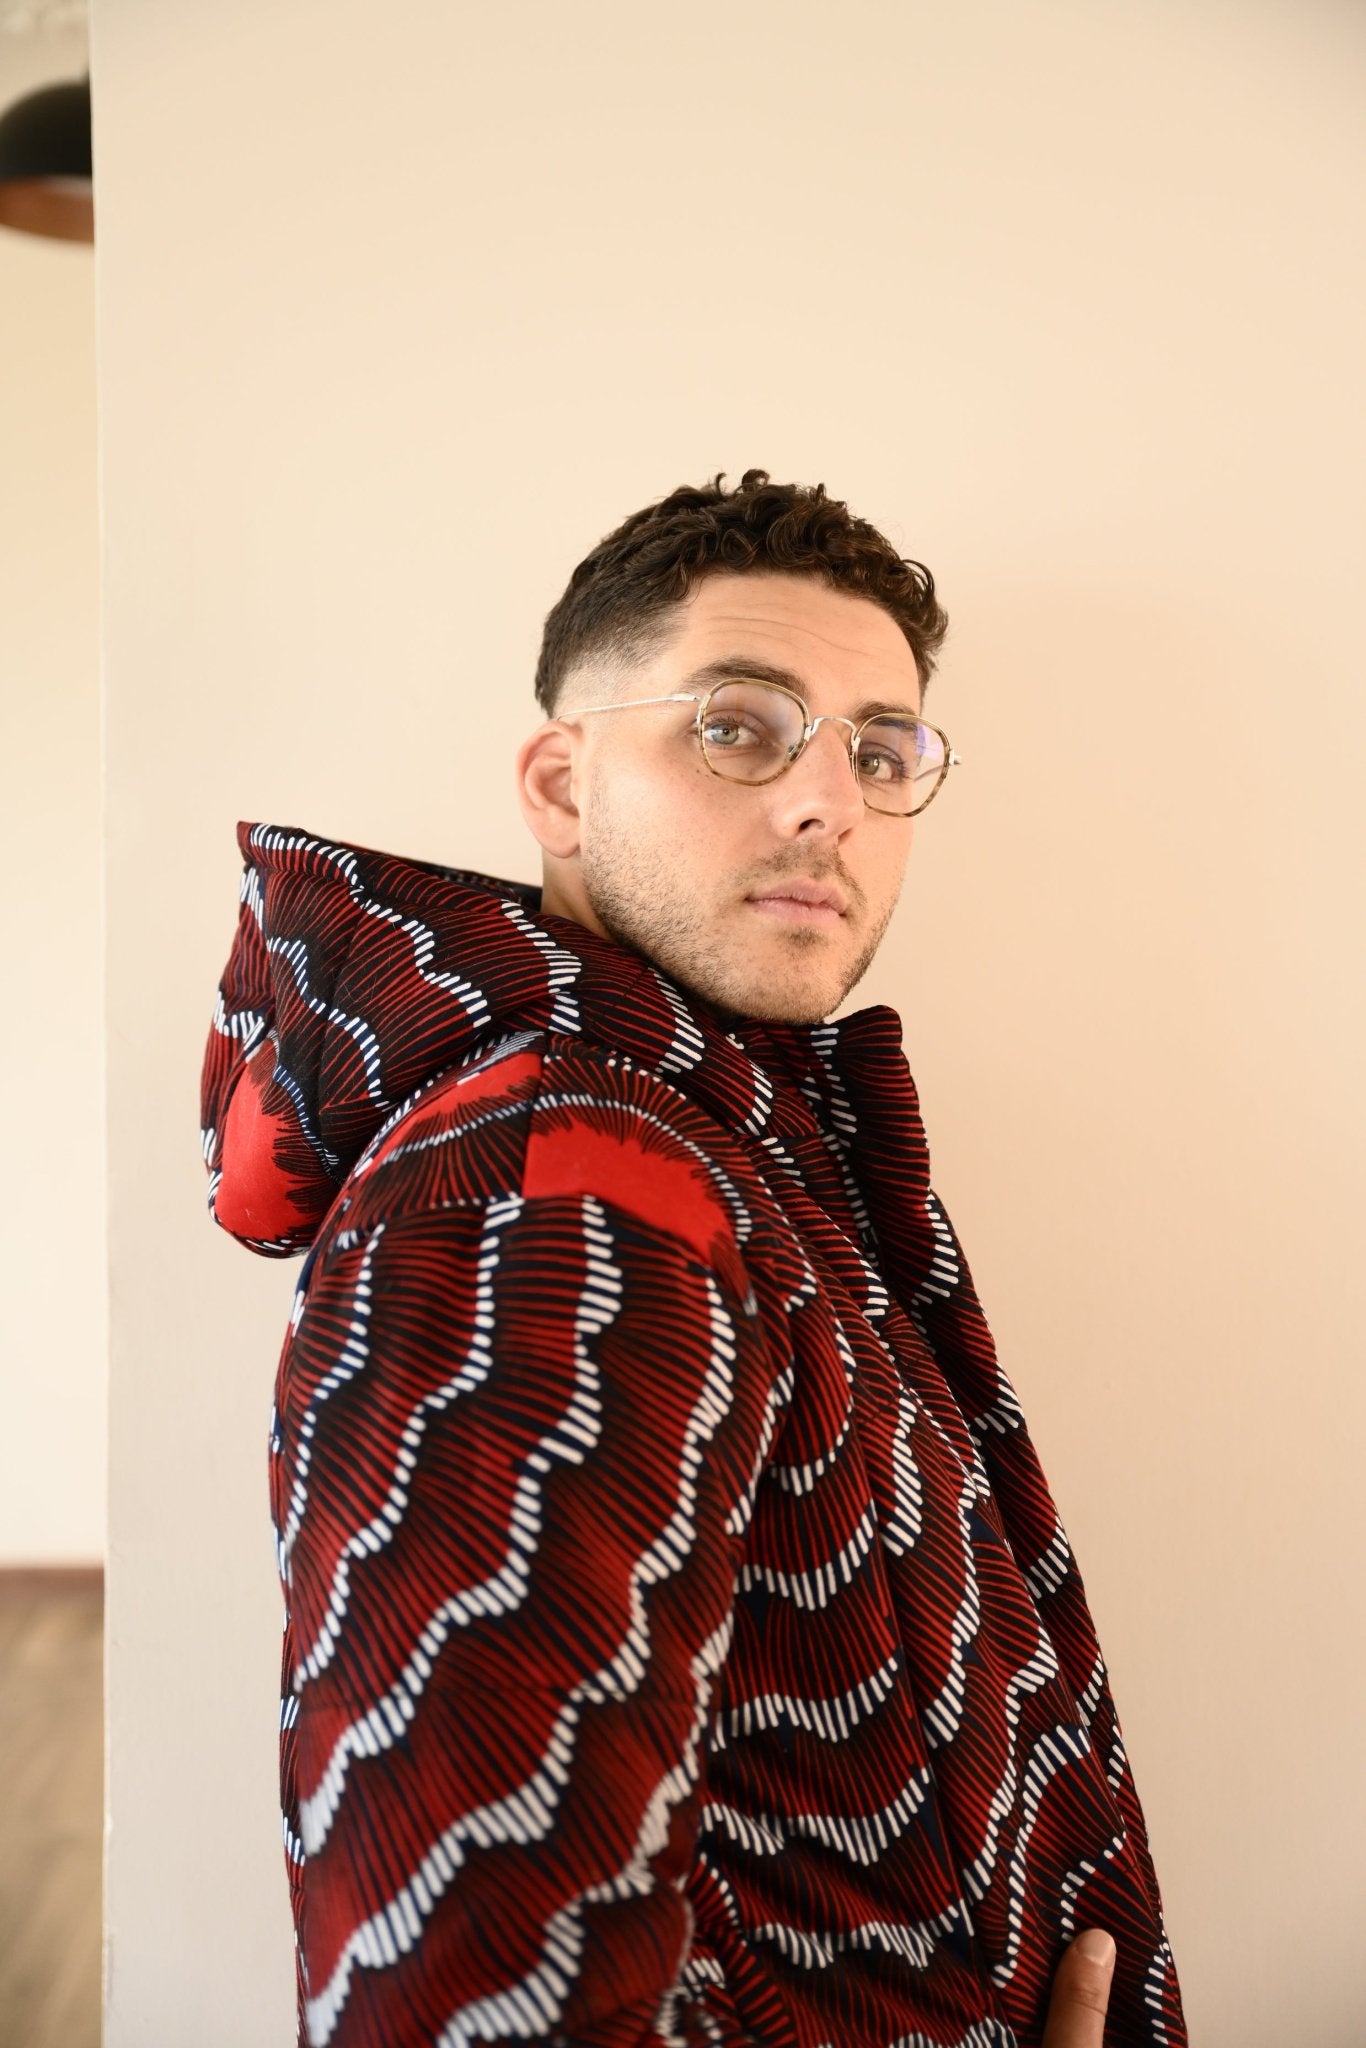 Wintermantel ‚Laini‘ - mikono.africa Jacken aus Kenia bunte Bomberjacke Partyjacke faire sozial nachhaltig designed in Kenia